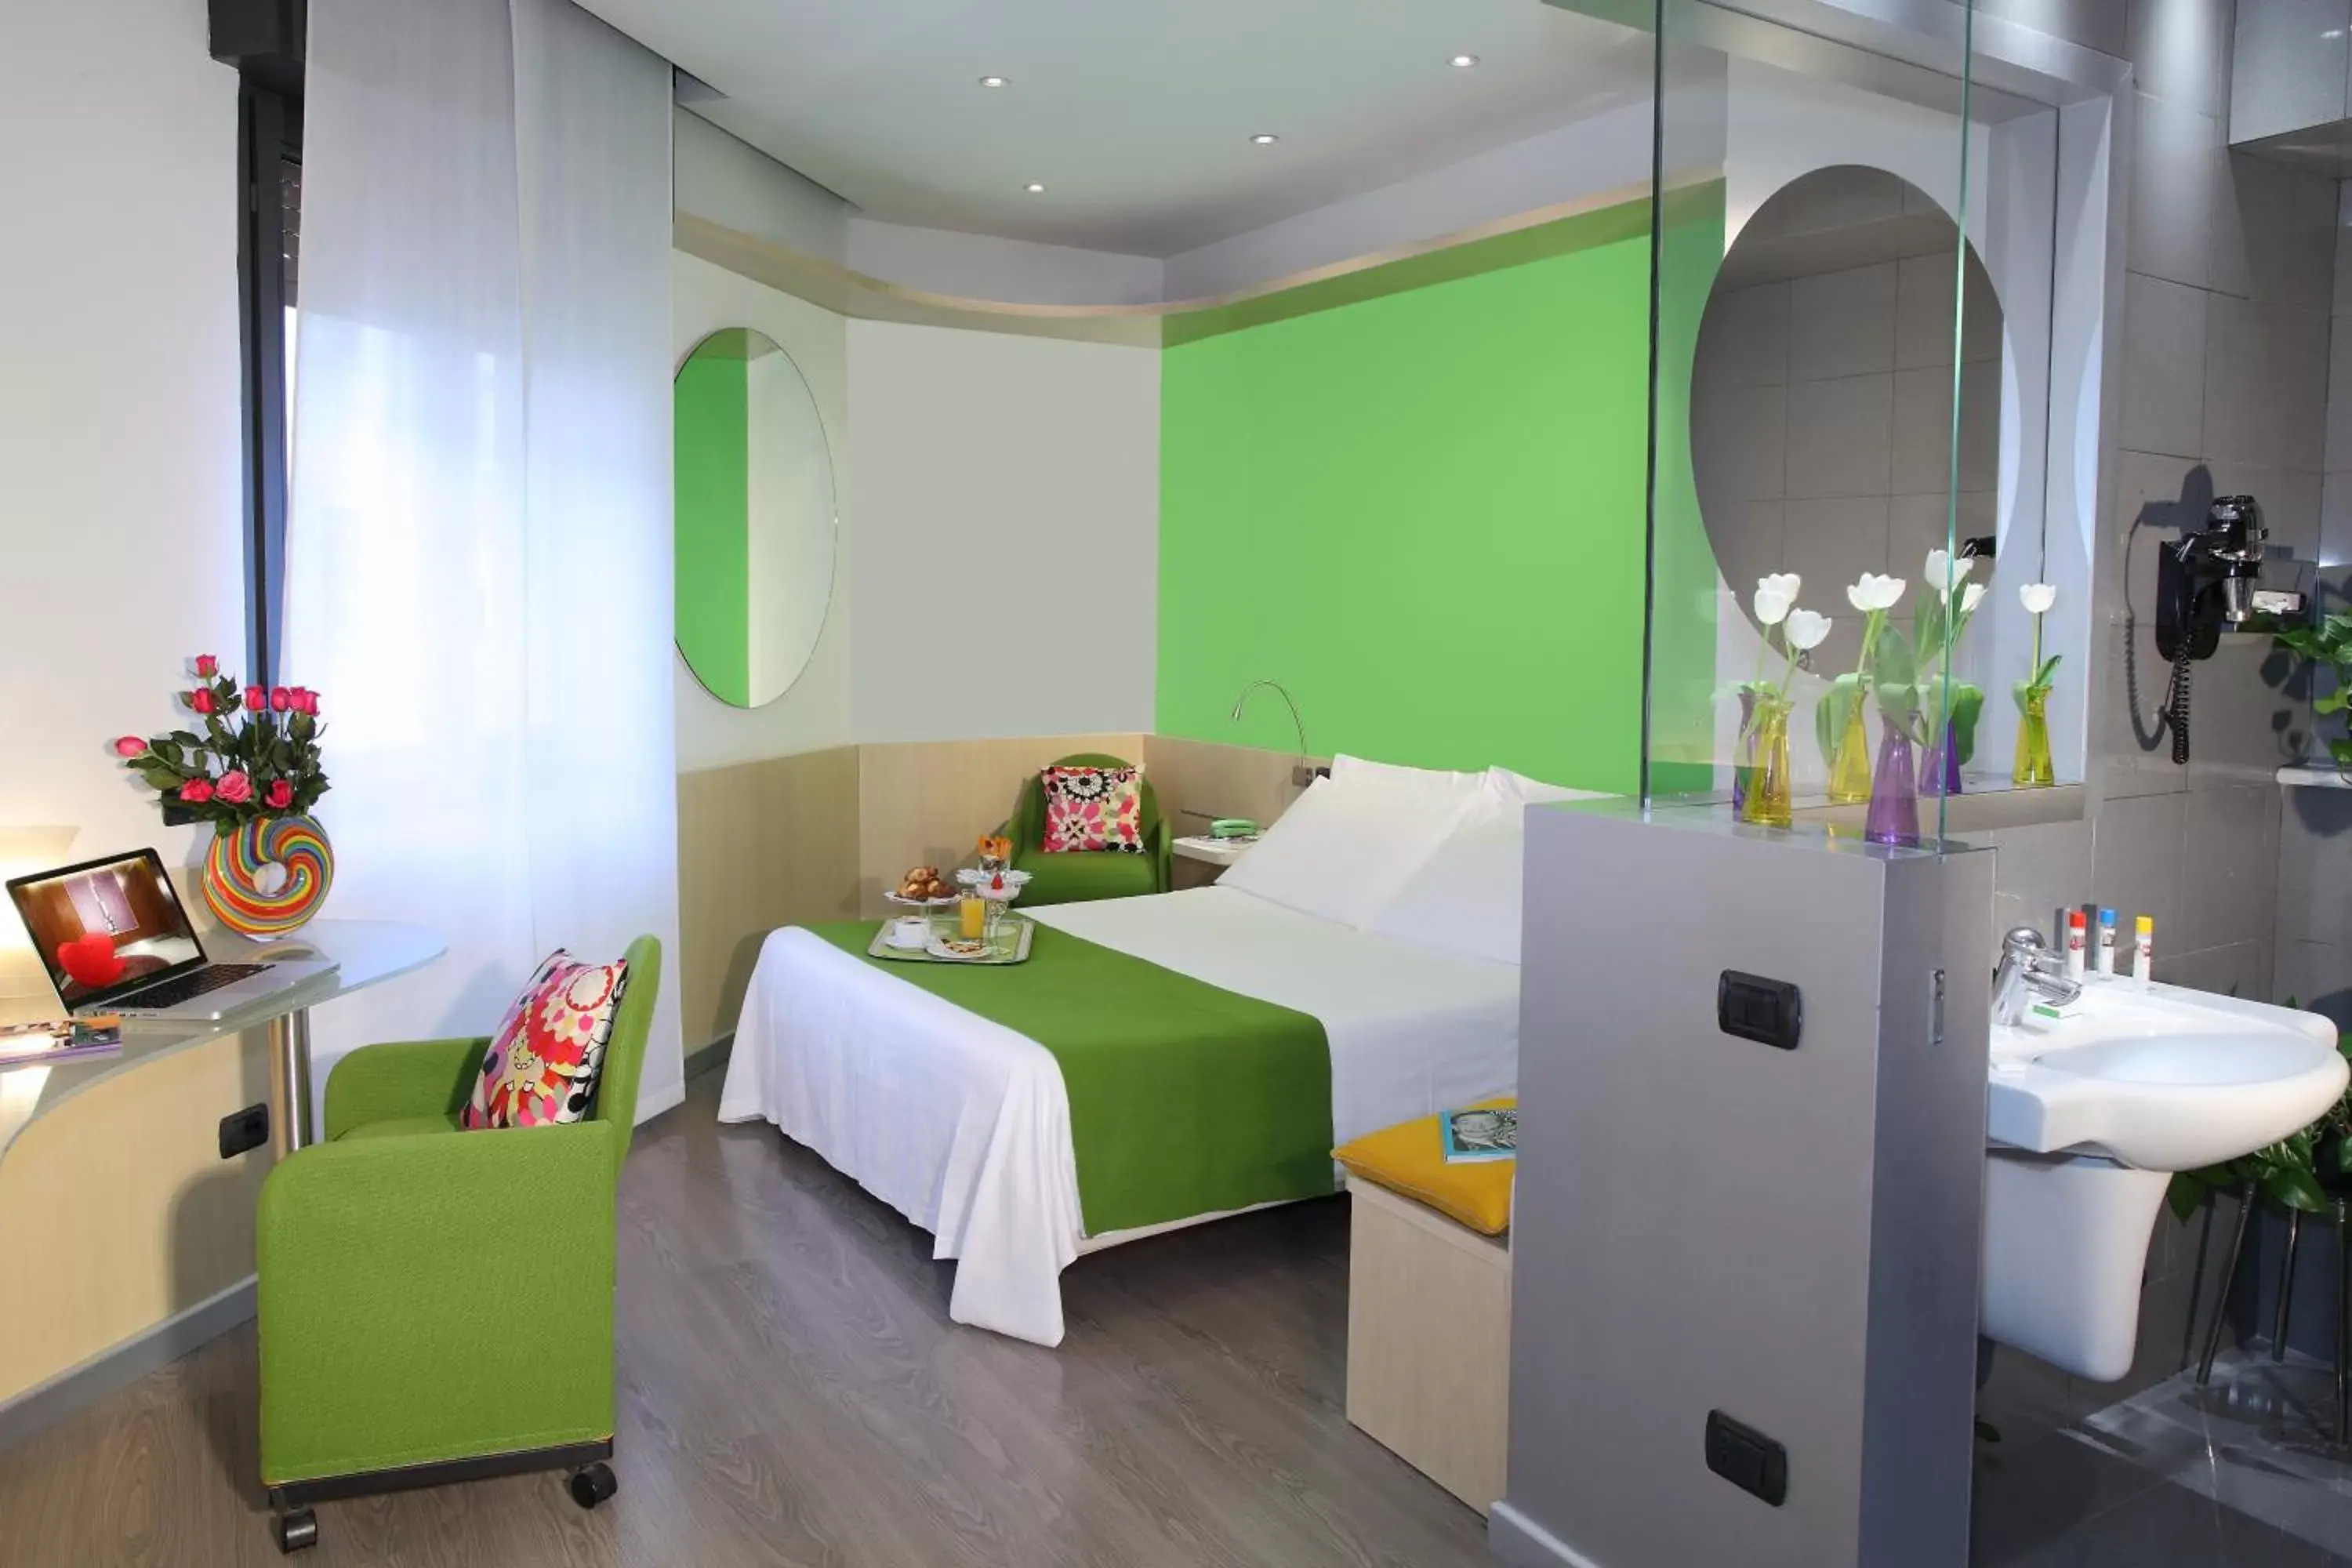 Bed, Room Photo in Hotel Mediolanum